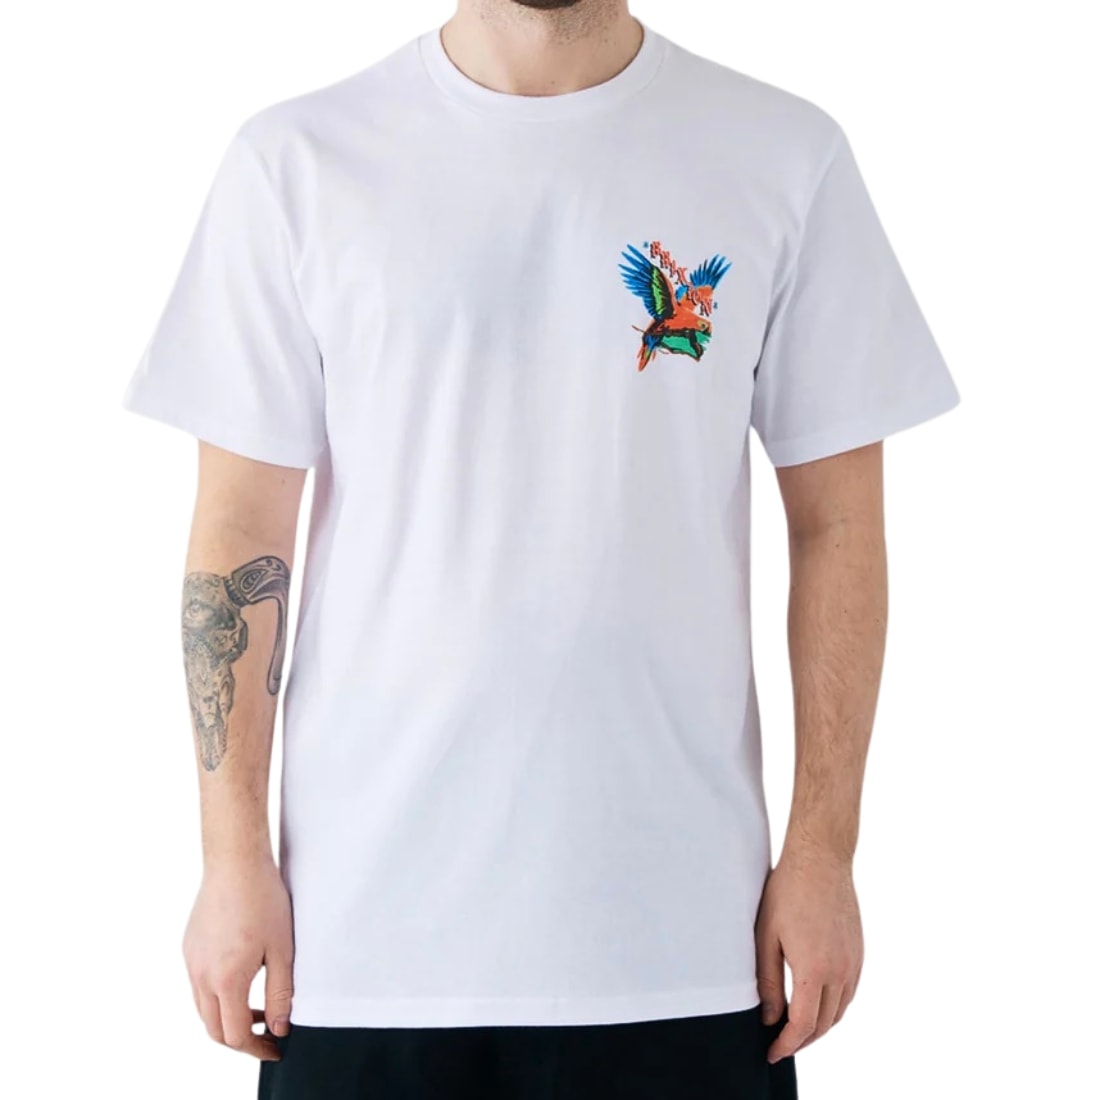 Brixton Loro T-Shirt - White - Mens Skate Brand T-Shirt by Brixton